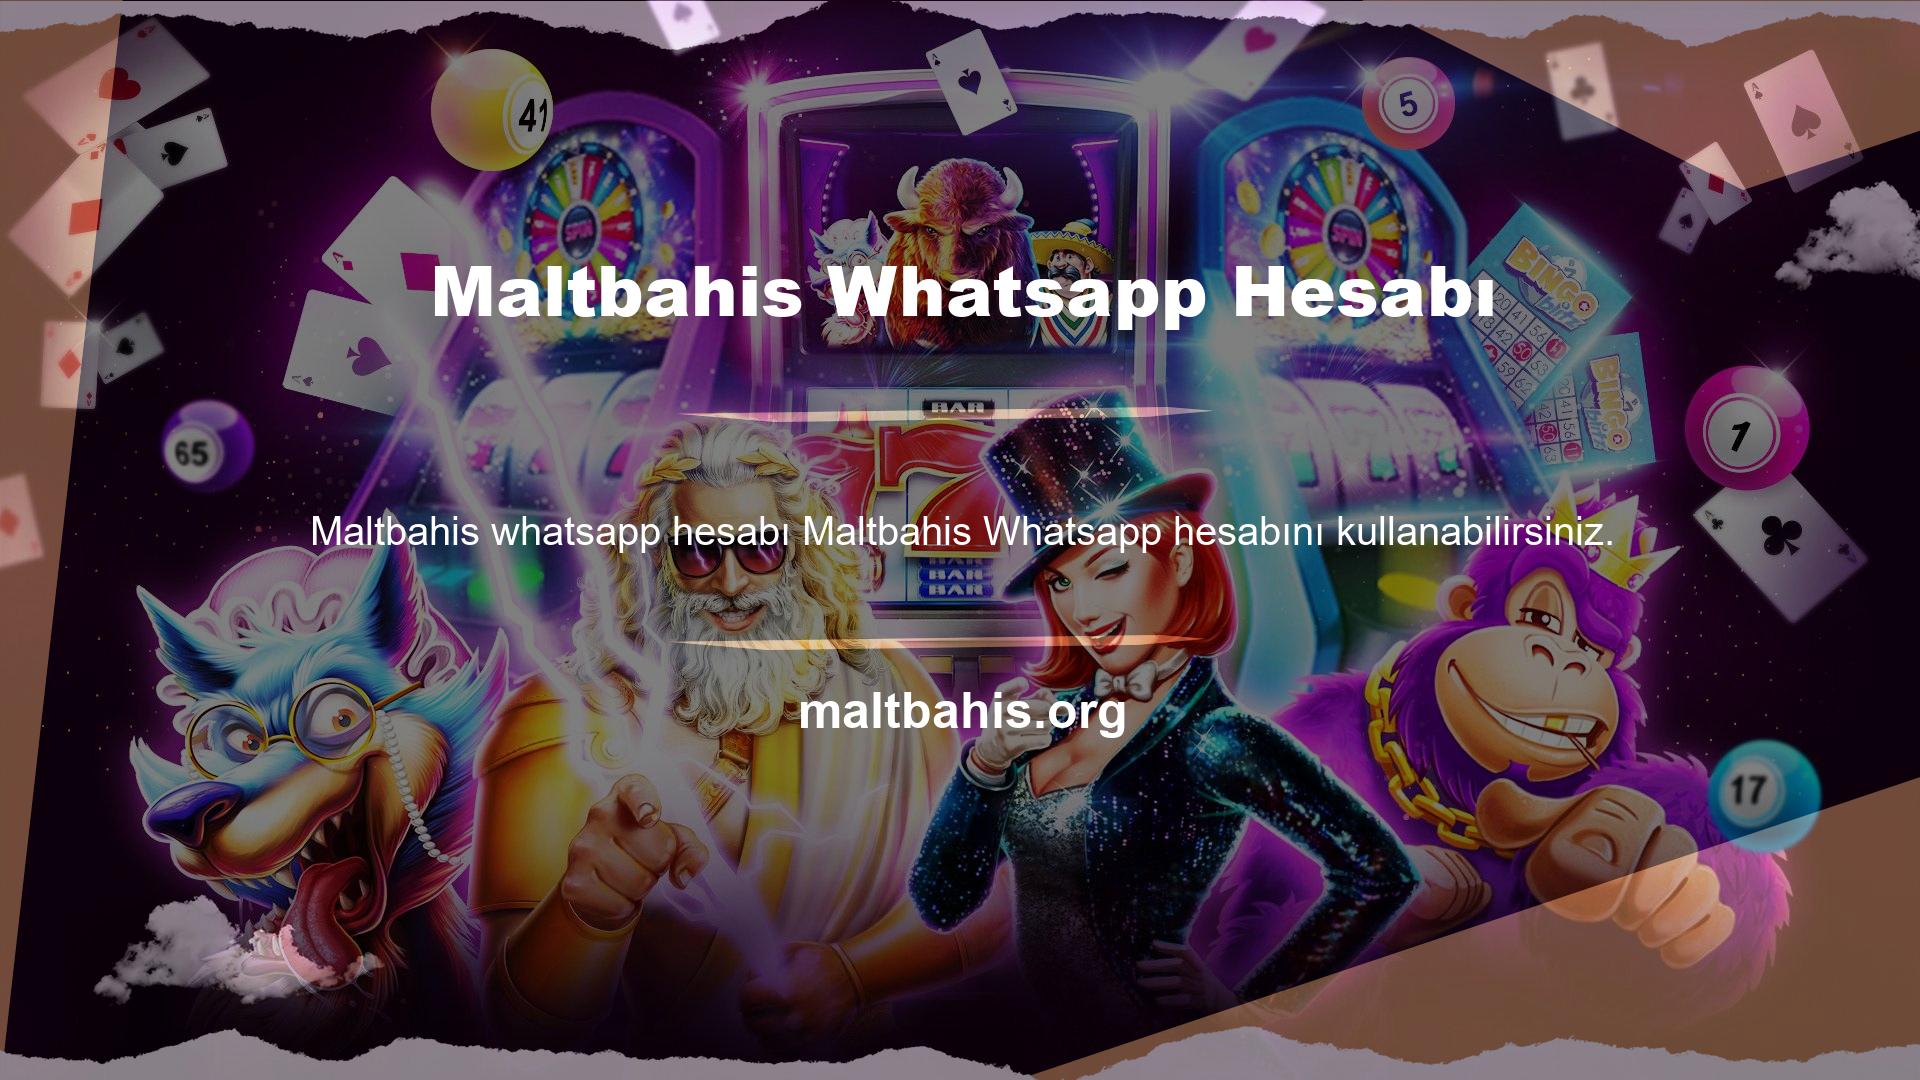 Maltbahis Whatsapp Hesabı